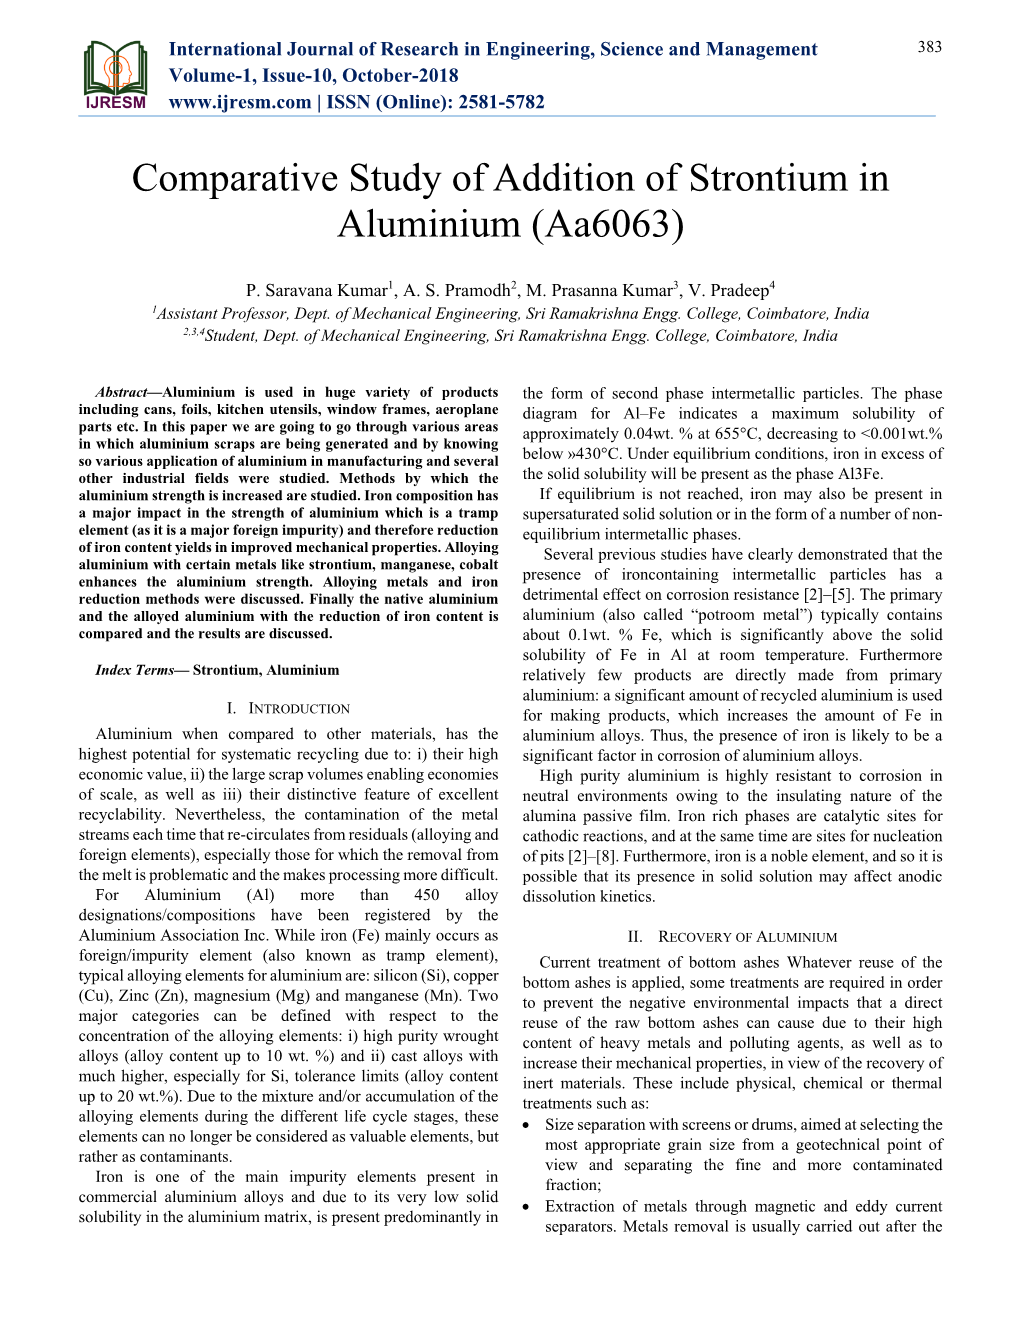 Comparative Study of Addition of Strontium in Aluminium (Aa6063)